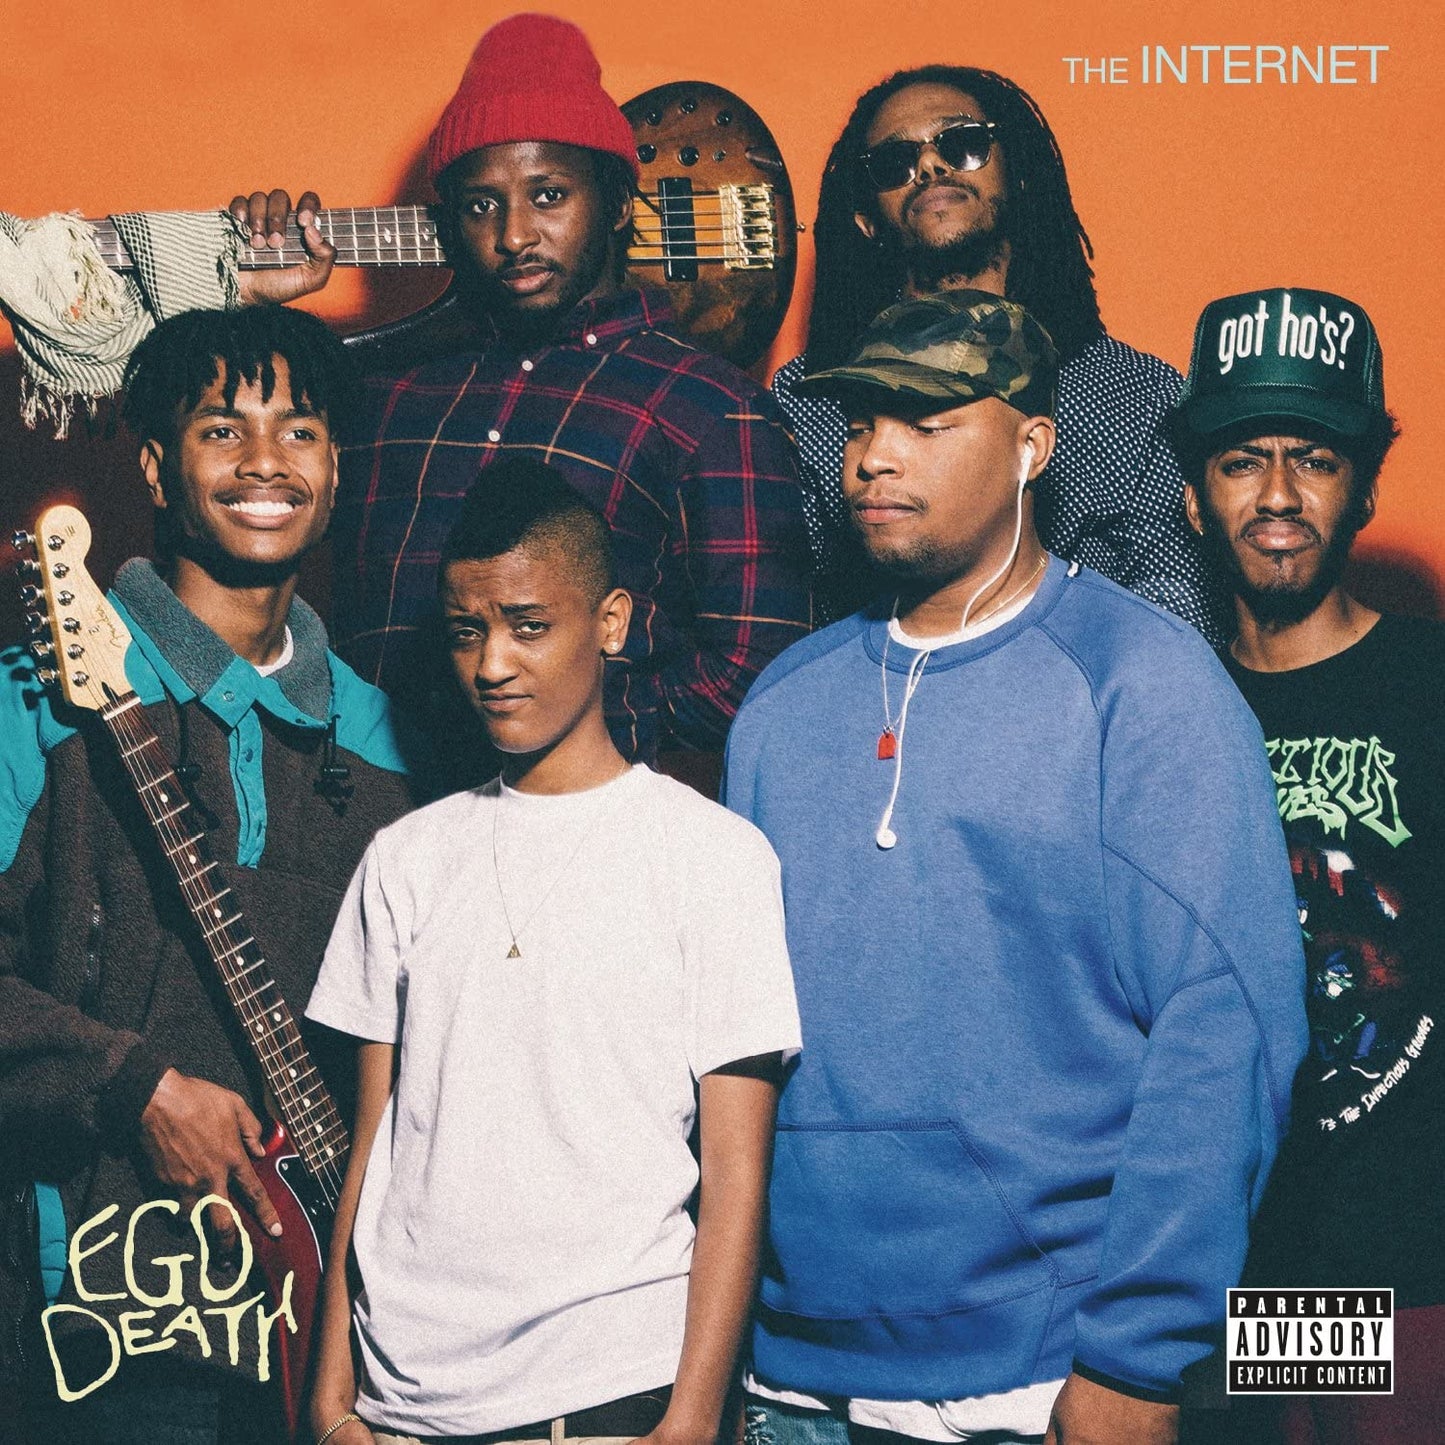 Internet, The/Ego Death [LP]